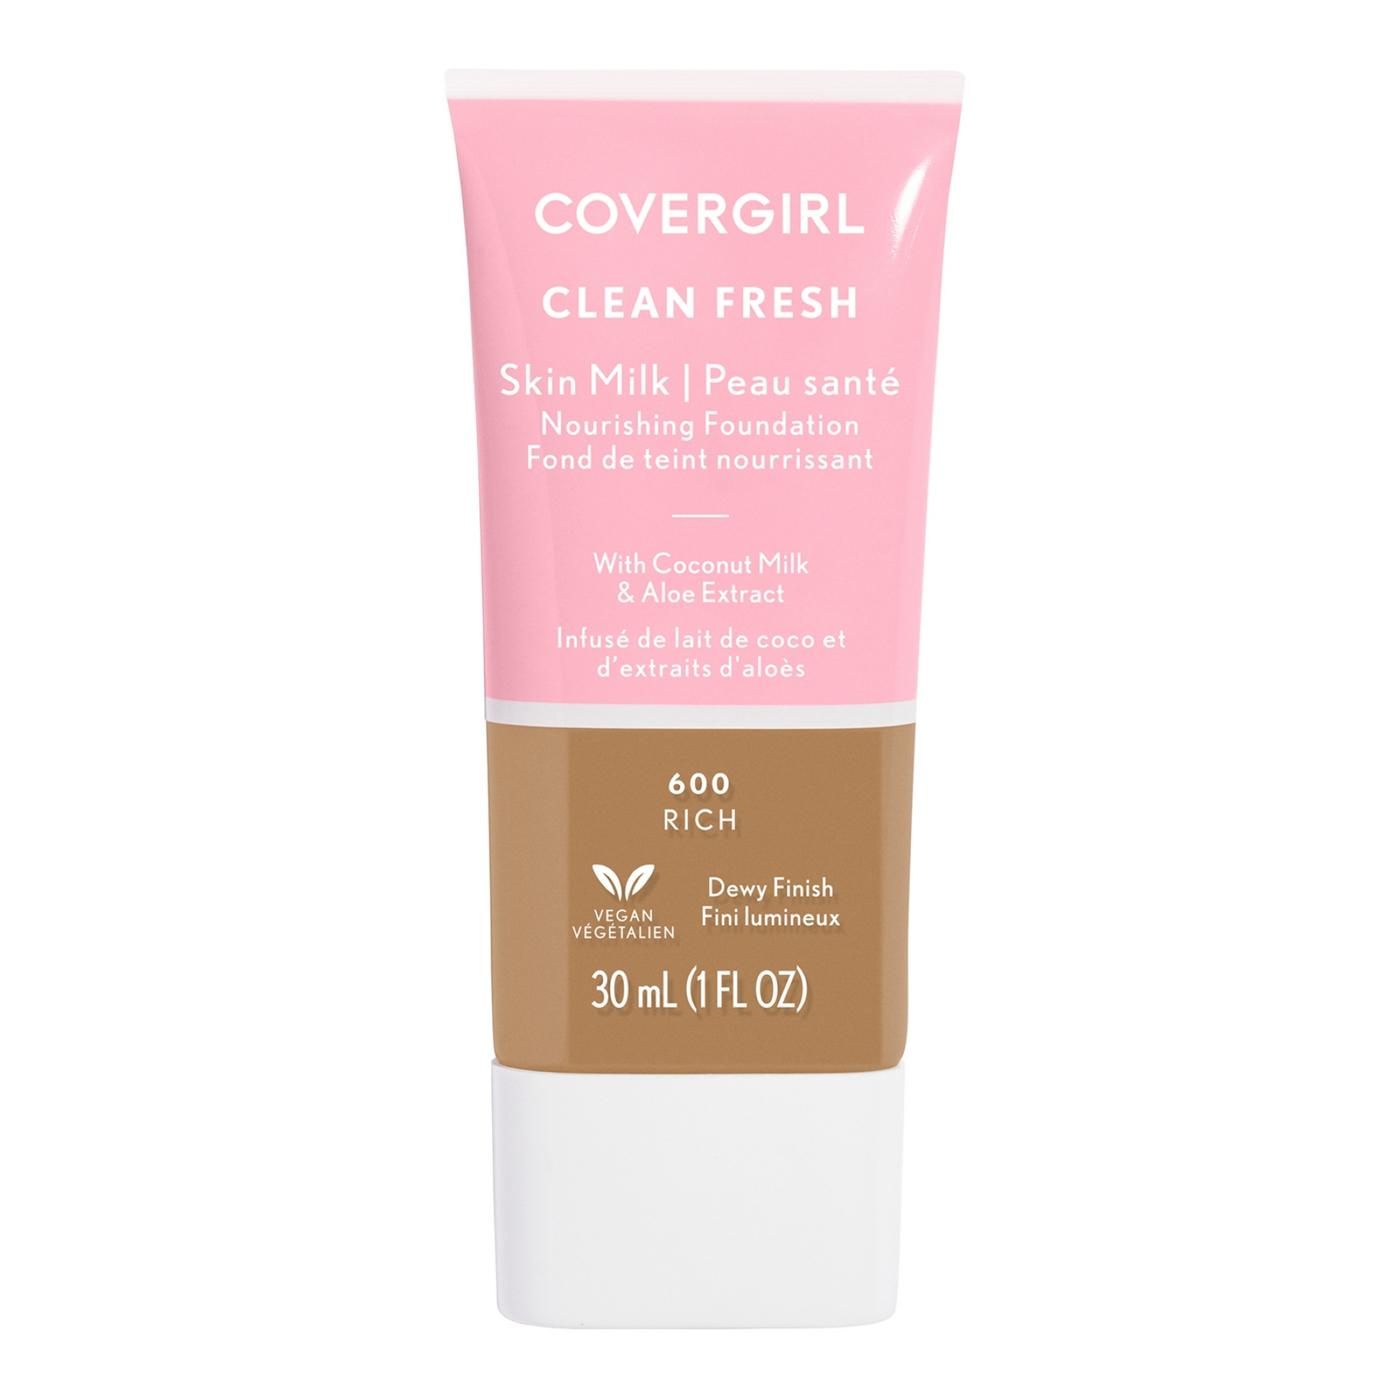 Covergirl Clean Fresh Skin Milk Foundation 600 Rich; image 1 of 6